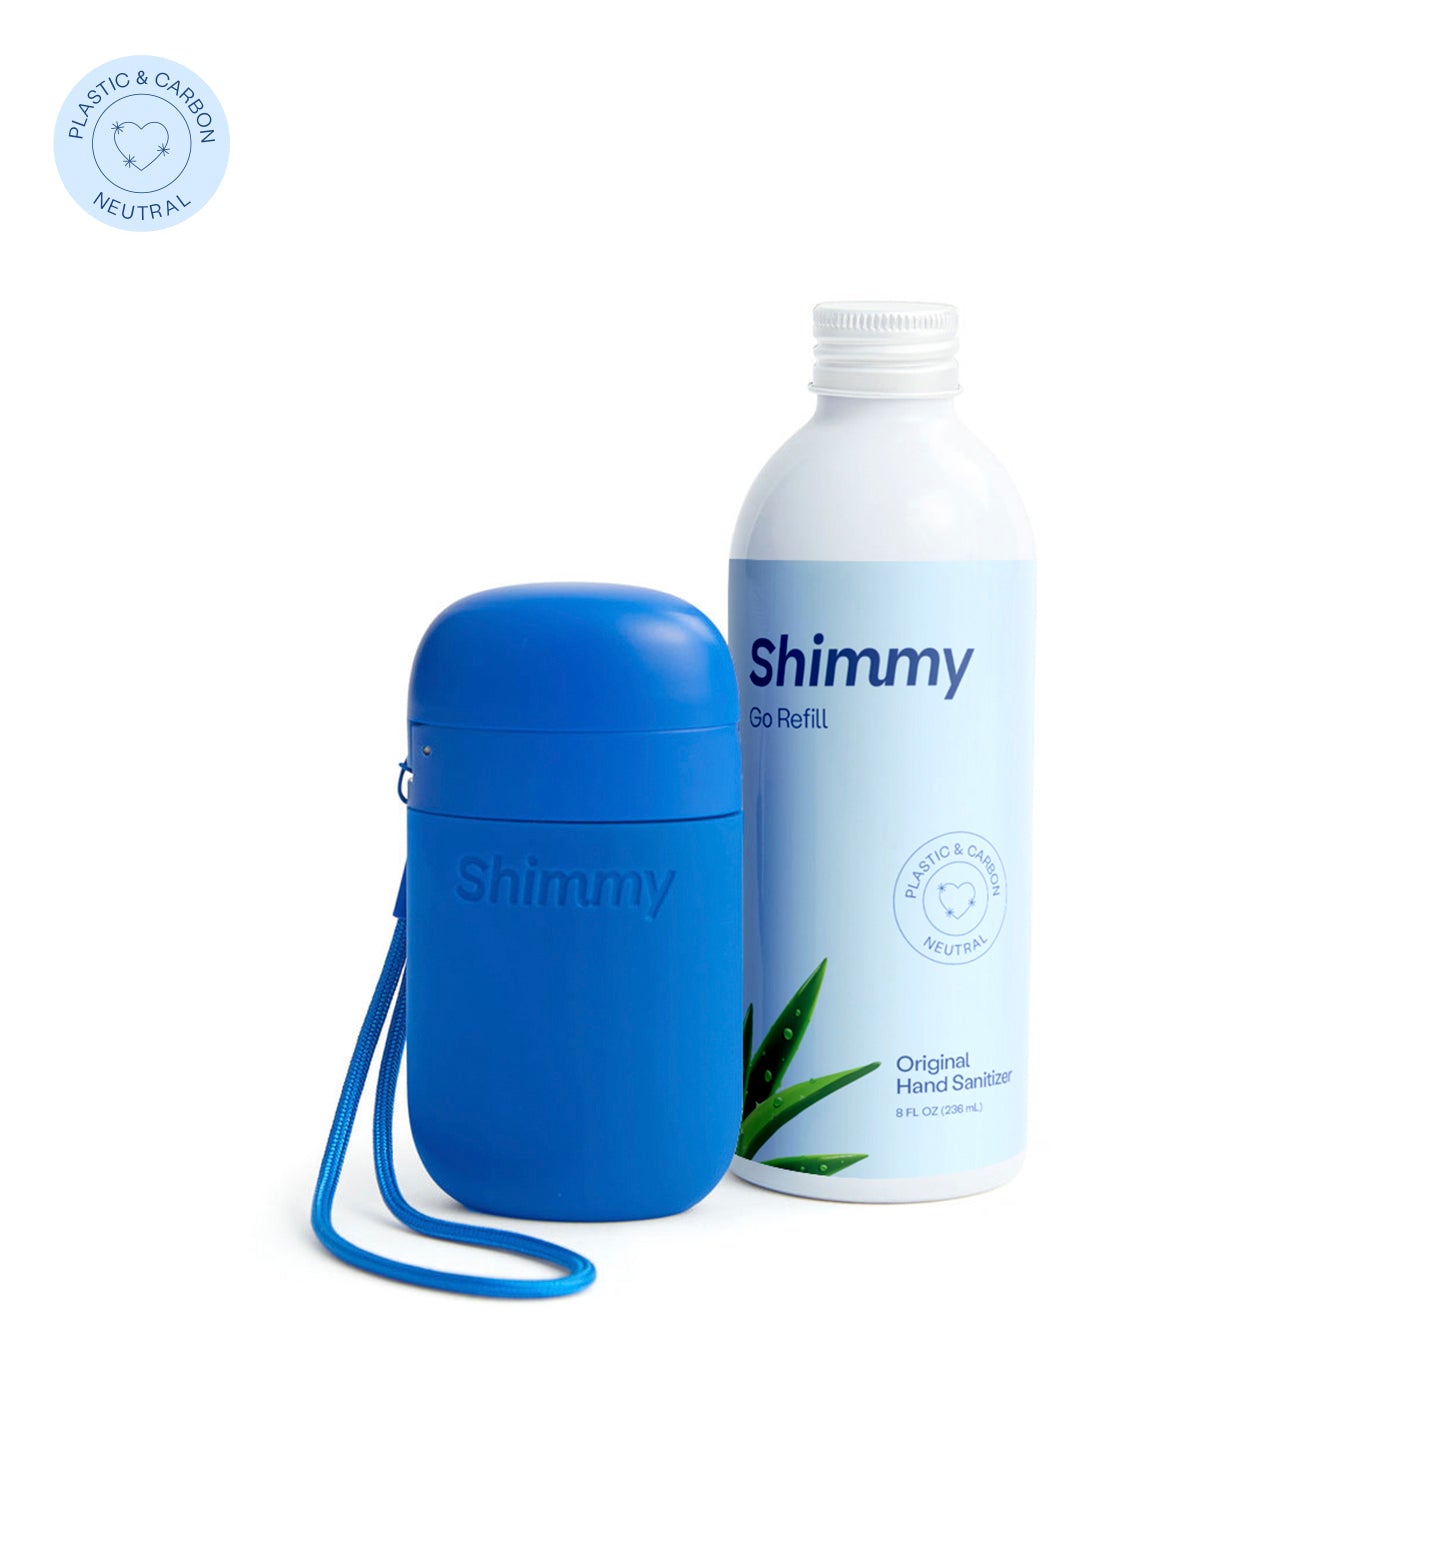 Shimmy Go Portable Hand Sanitizer Dispenser Navy Blue + Original Hand Sanitizer [40734739169471] - 40734739169471